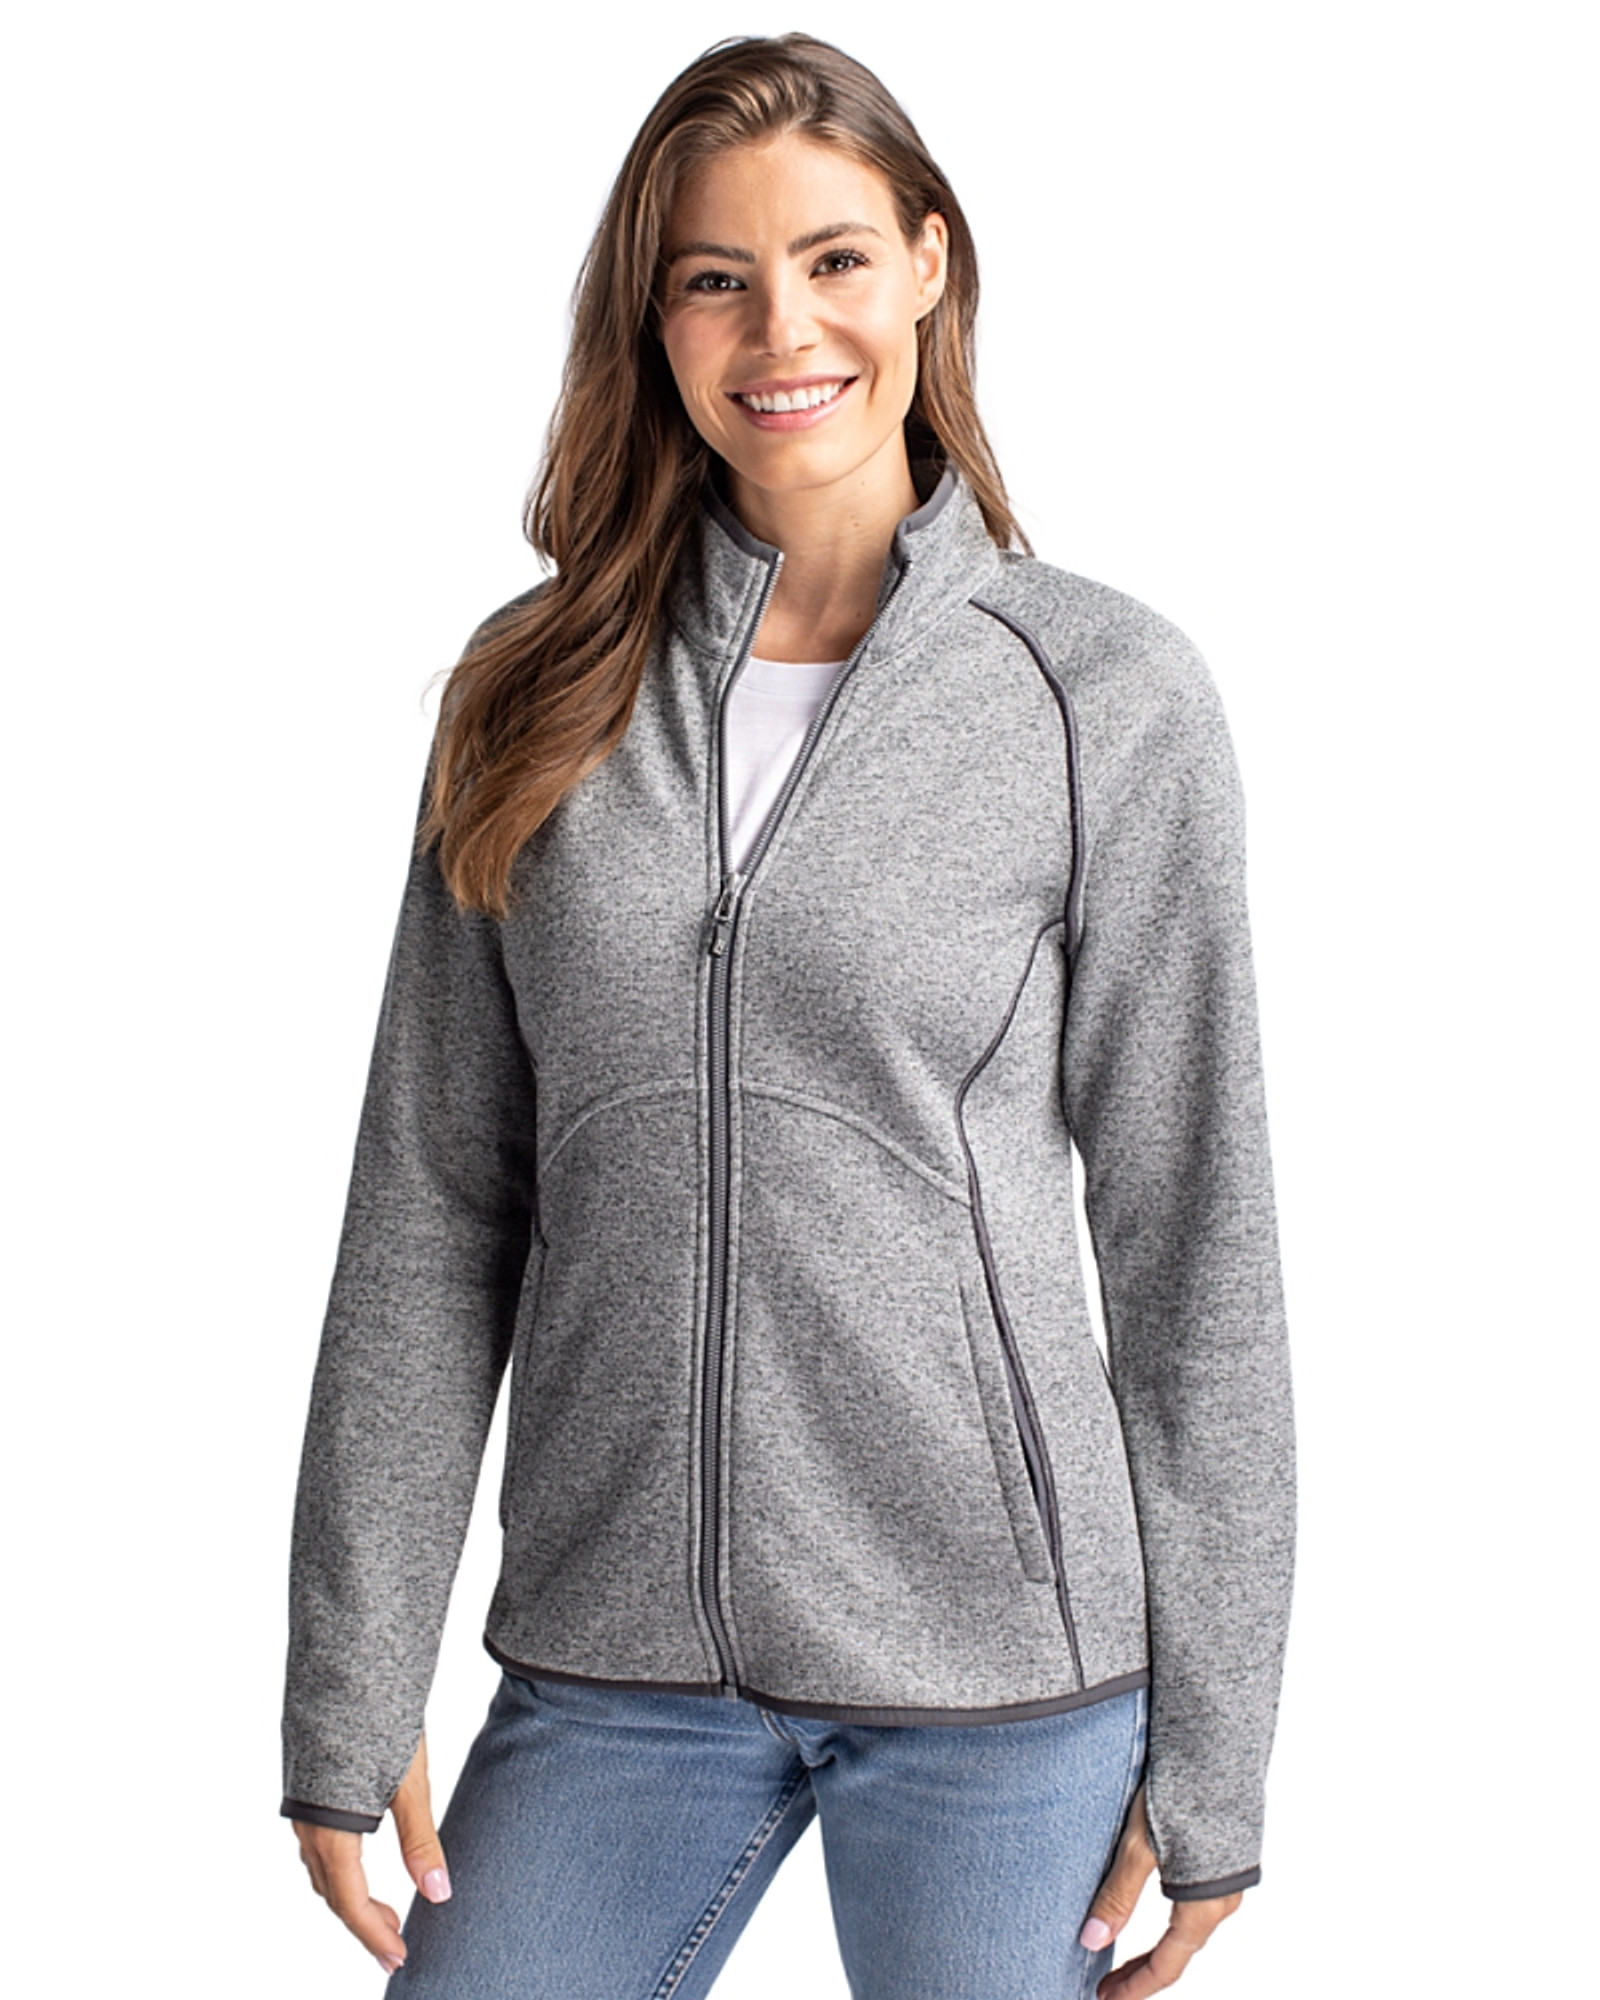 FOR HER Monogrammed Ladies' Quarter Zip Pullover Sweatshirt - FREE SHIP